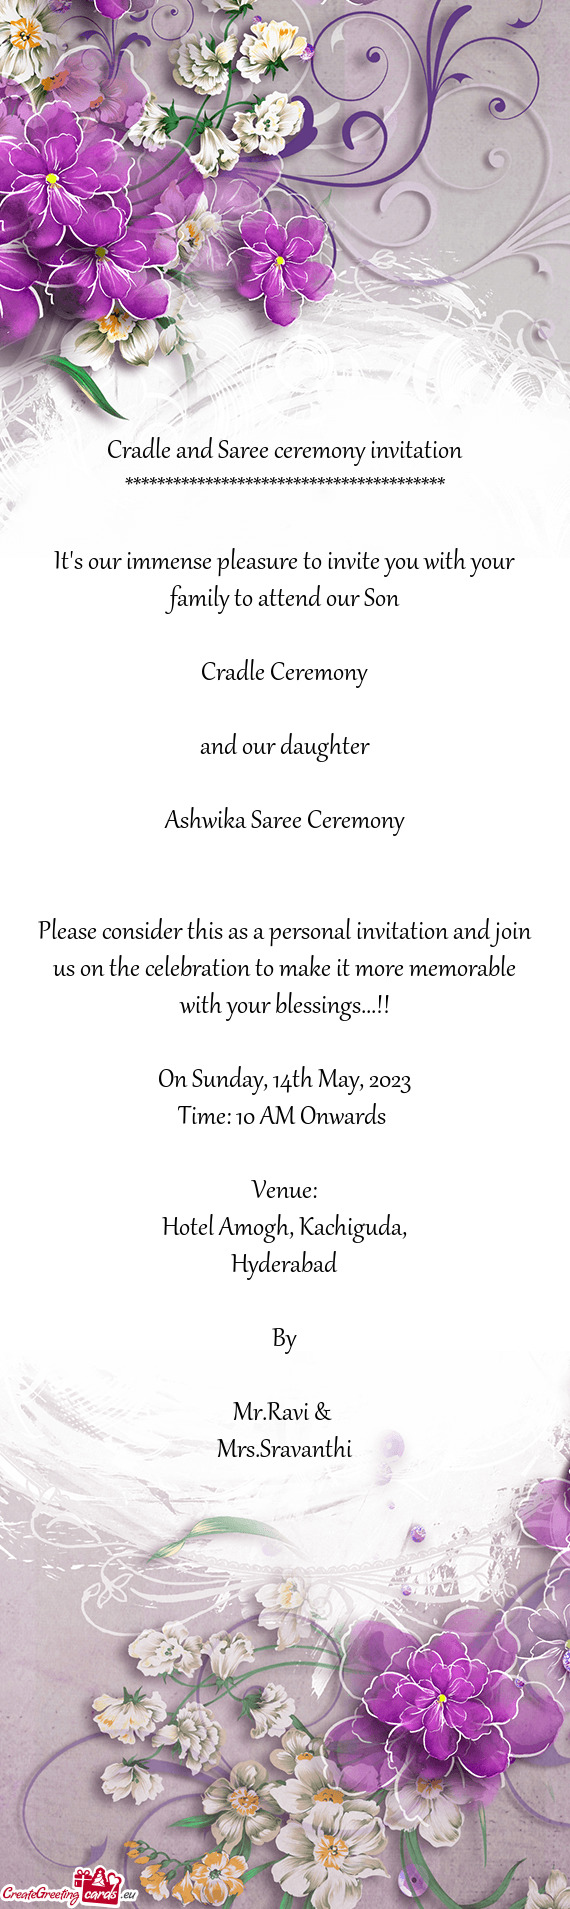 Ashwika Saree Ceremony